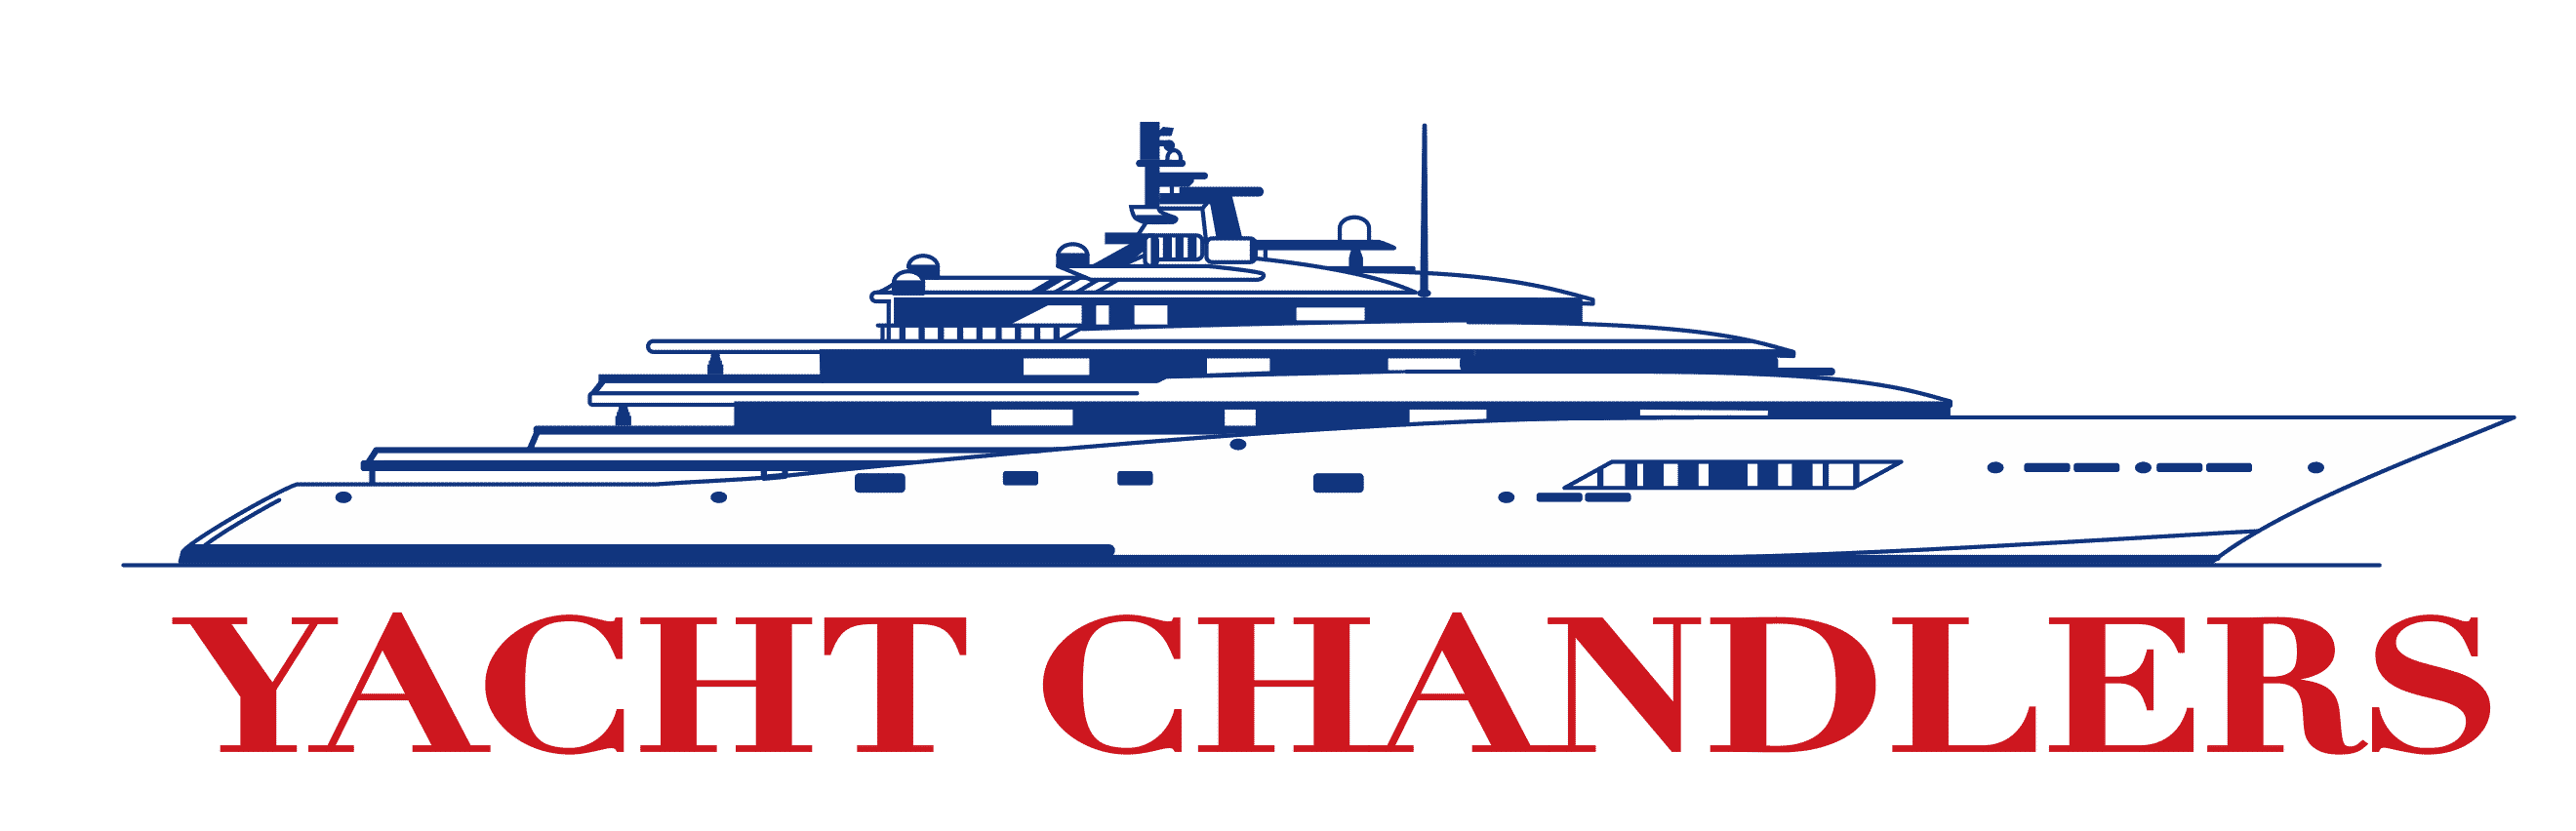 Yacht Chandlers logo